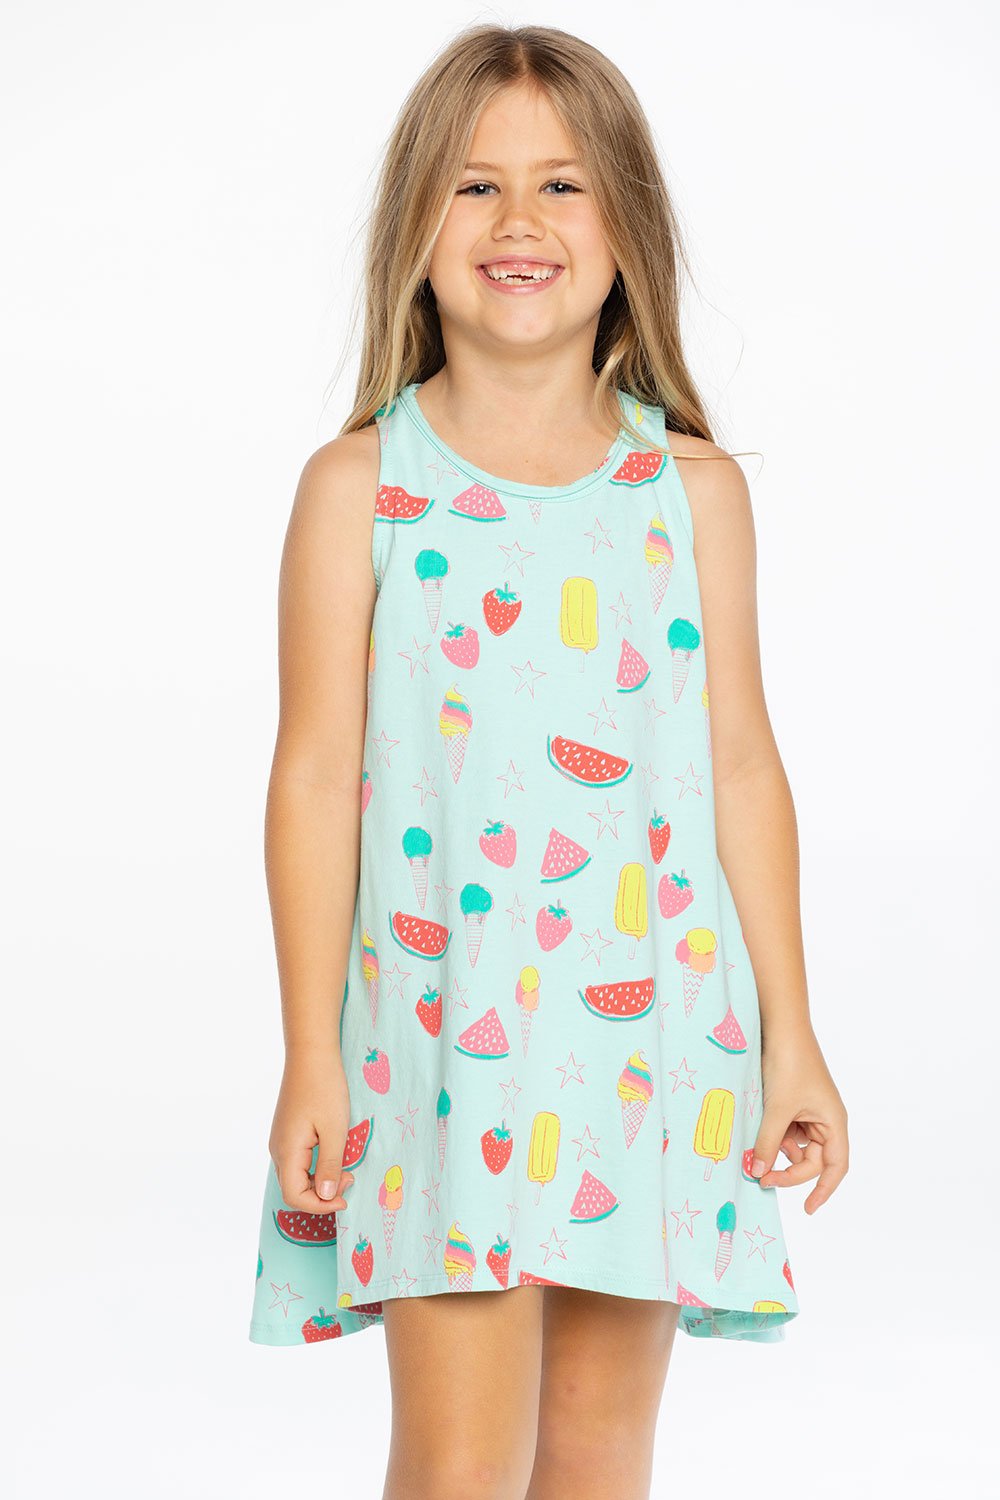 Chaser Kids Summer Treats Tank Dress in Aqua - FINAL SALE